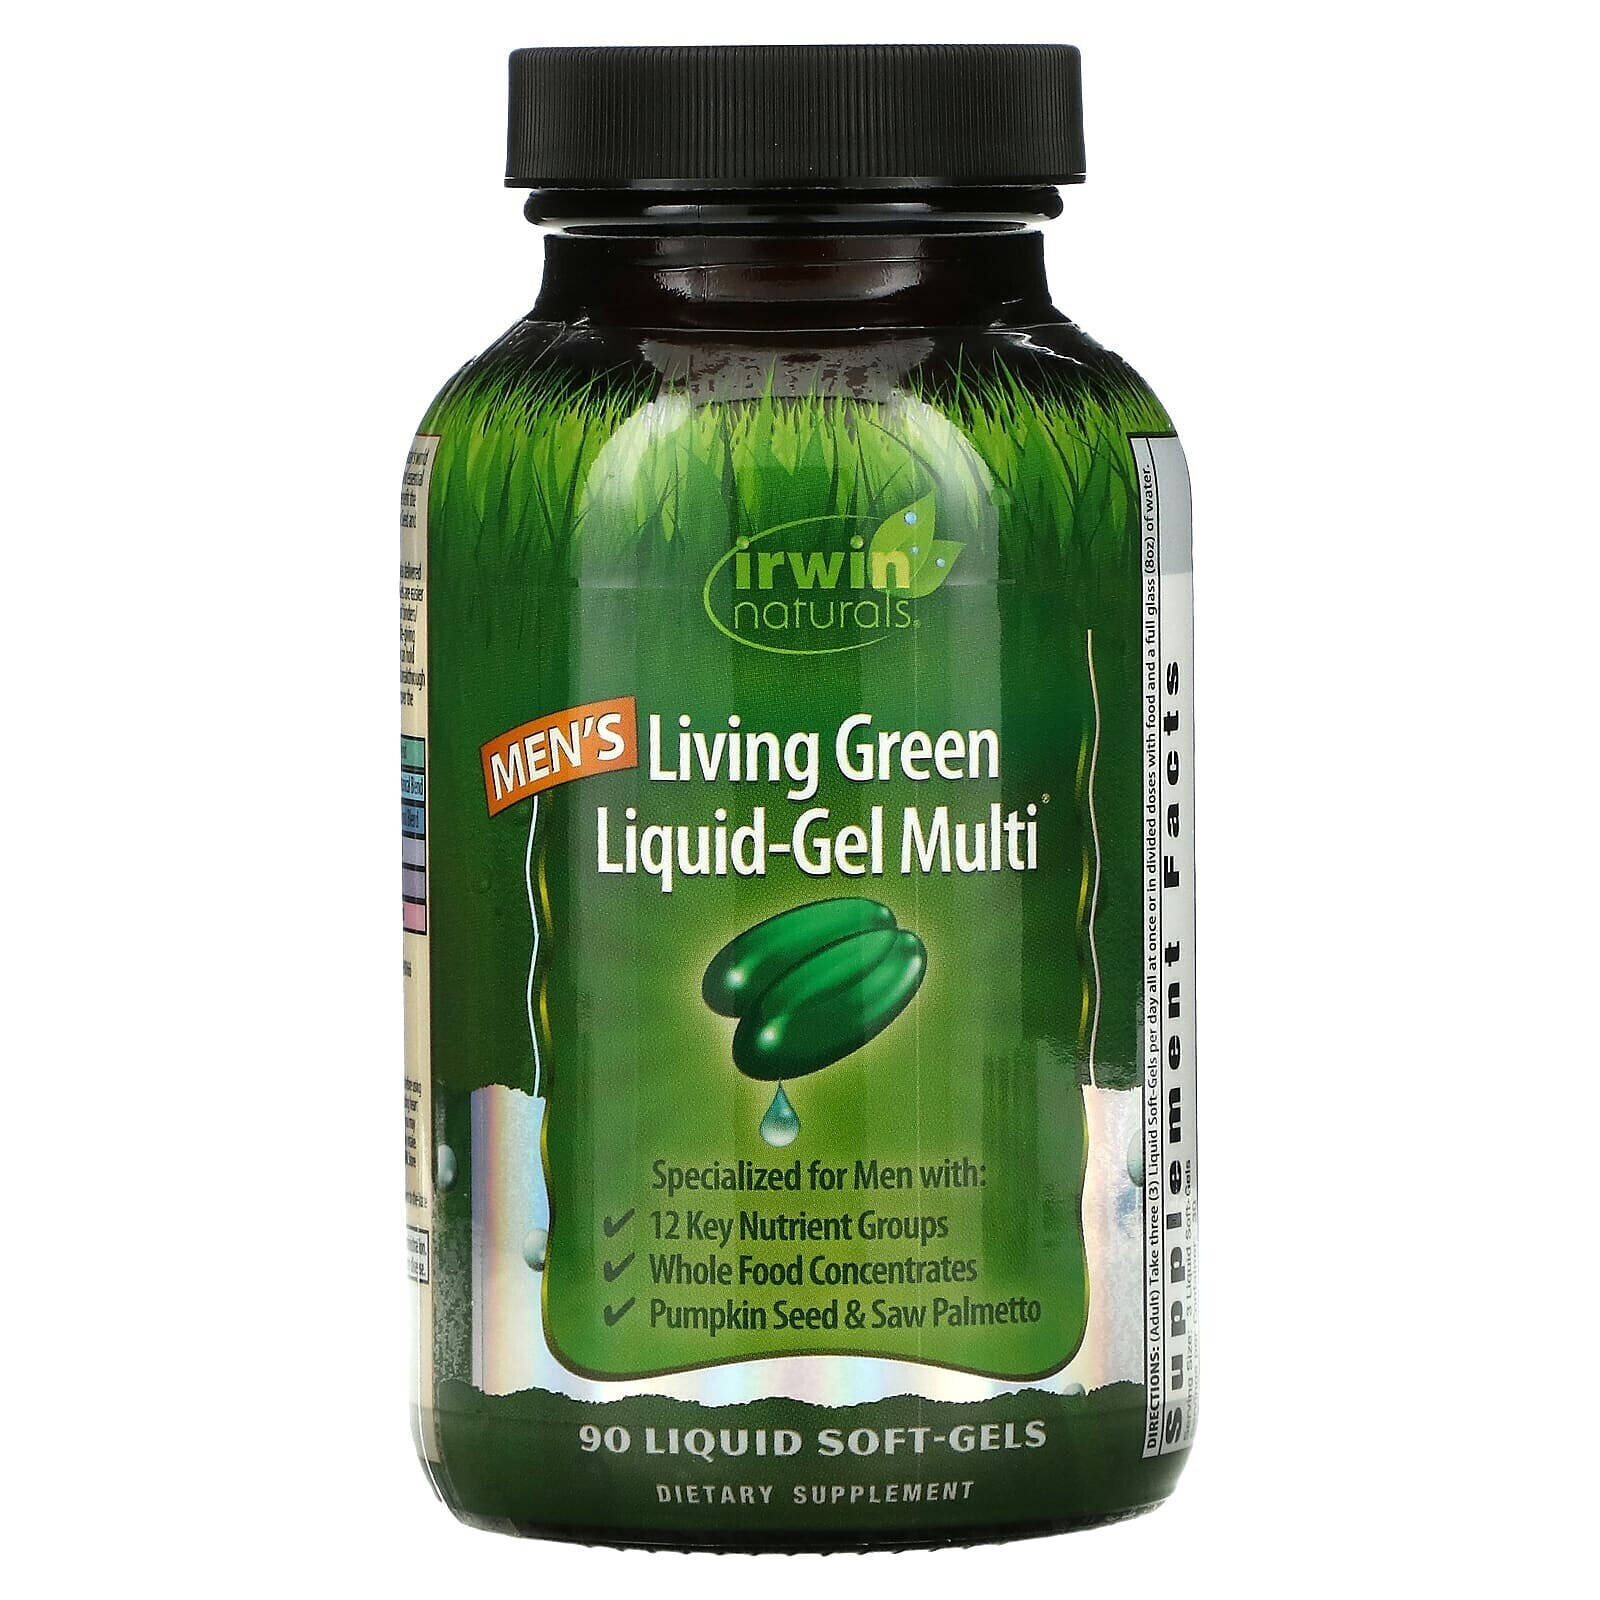 Irwin Naturals, Men's Living Green Liquid-Gel Multi, 120 Liquid Soft-Gels